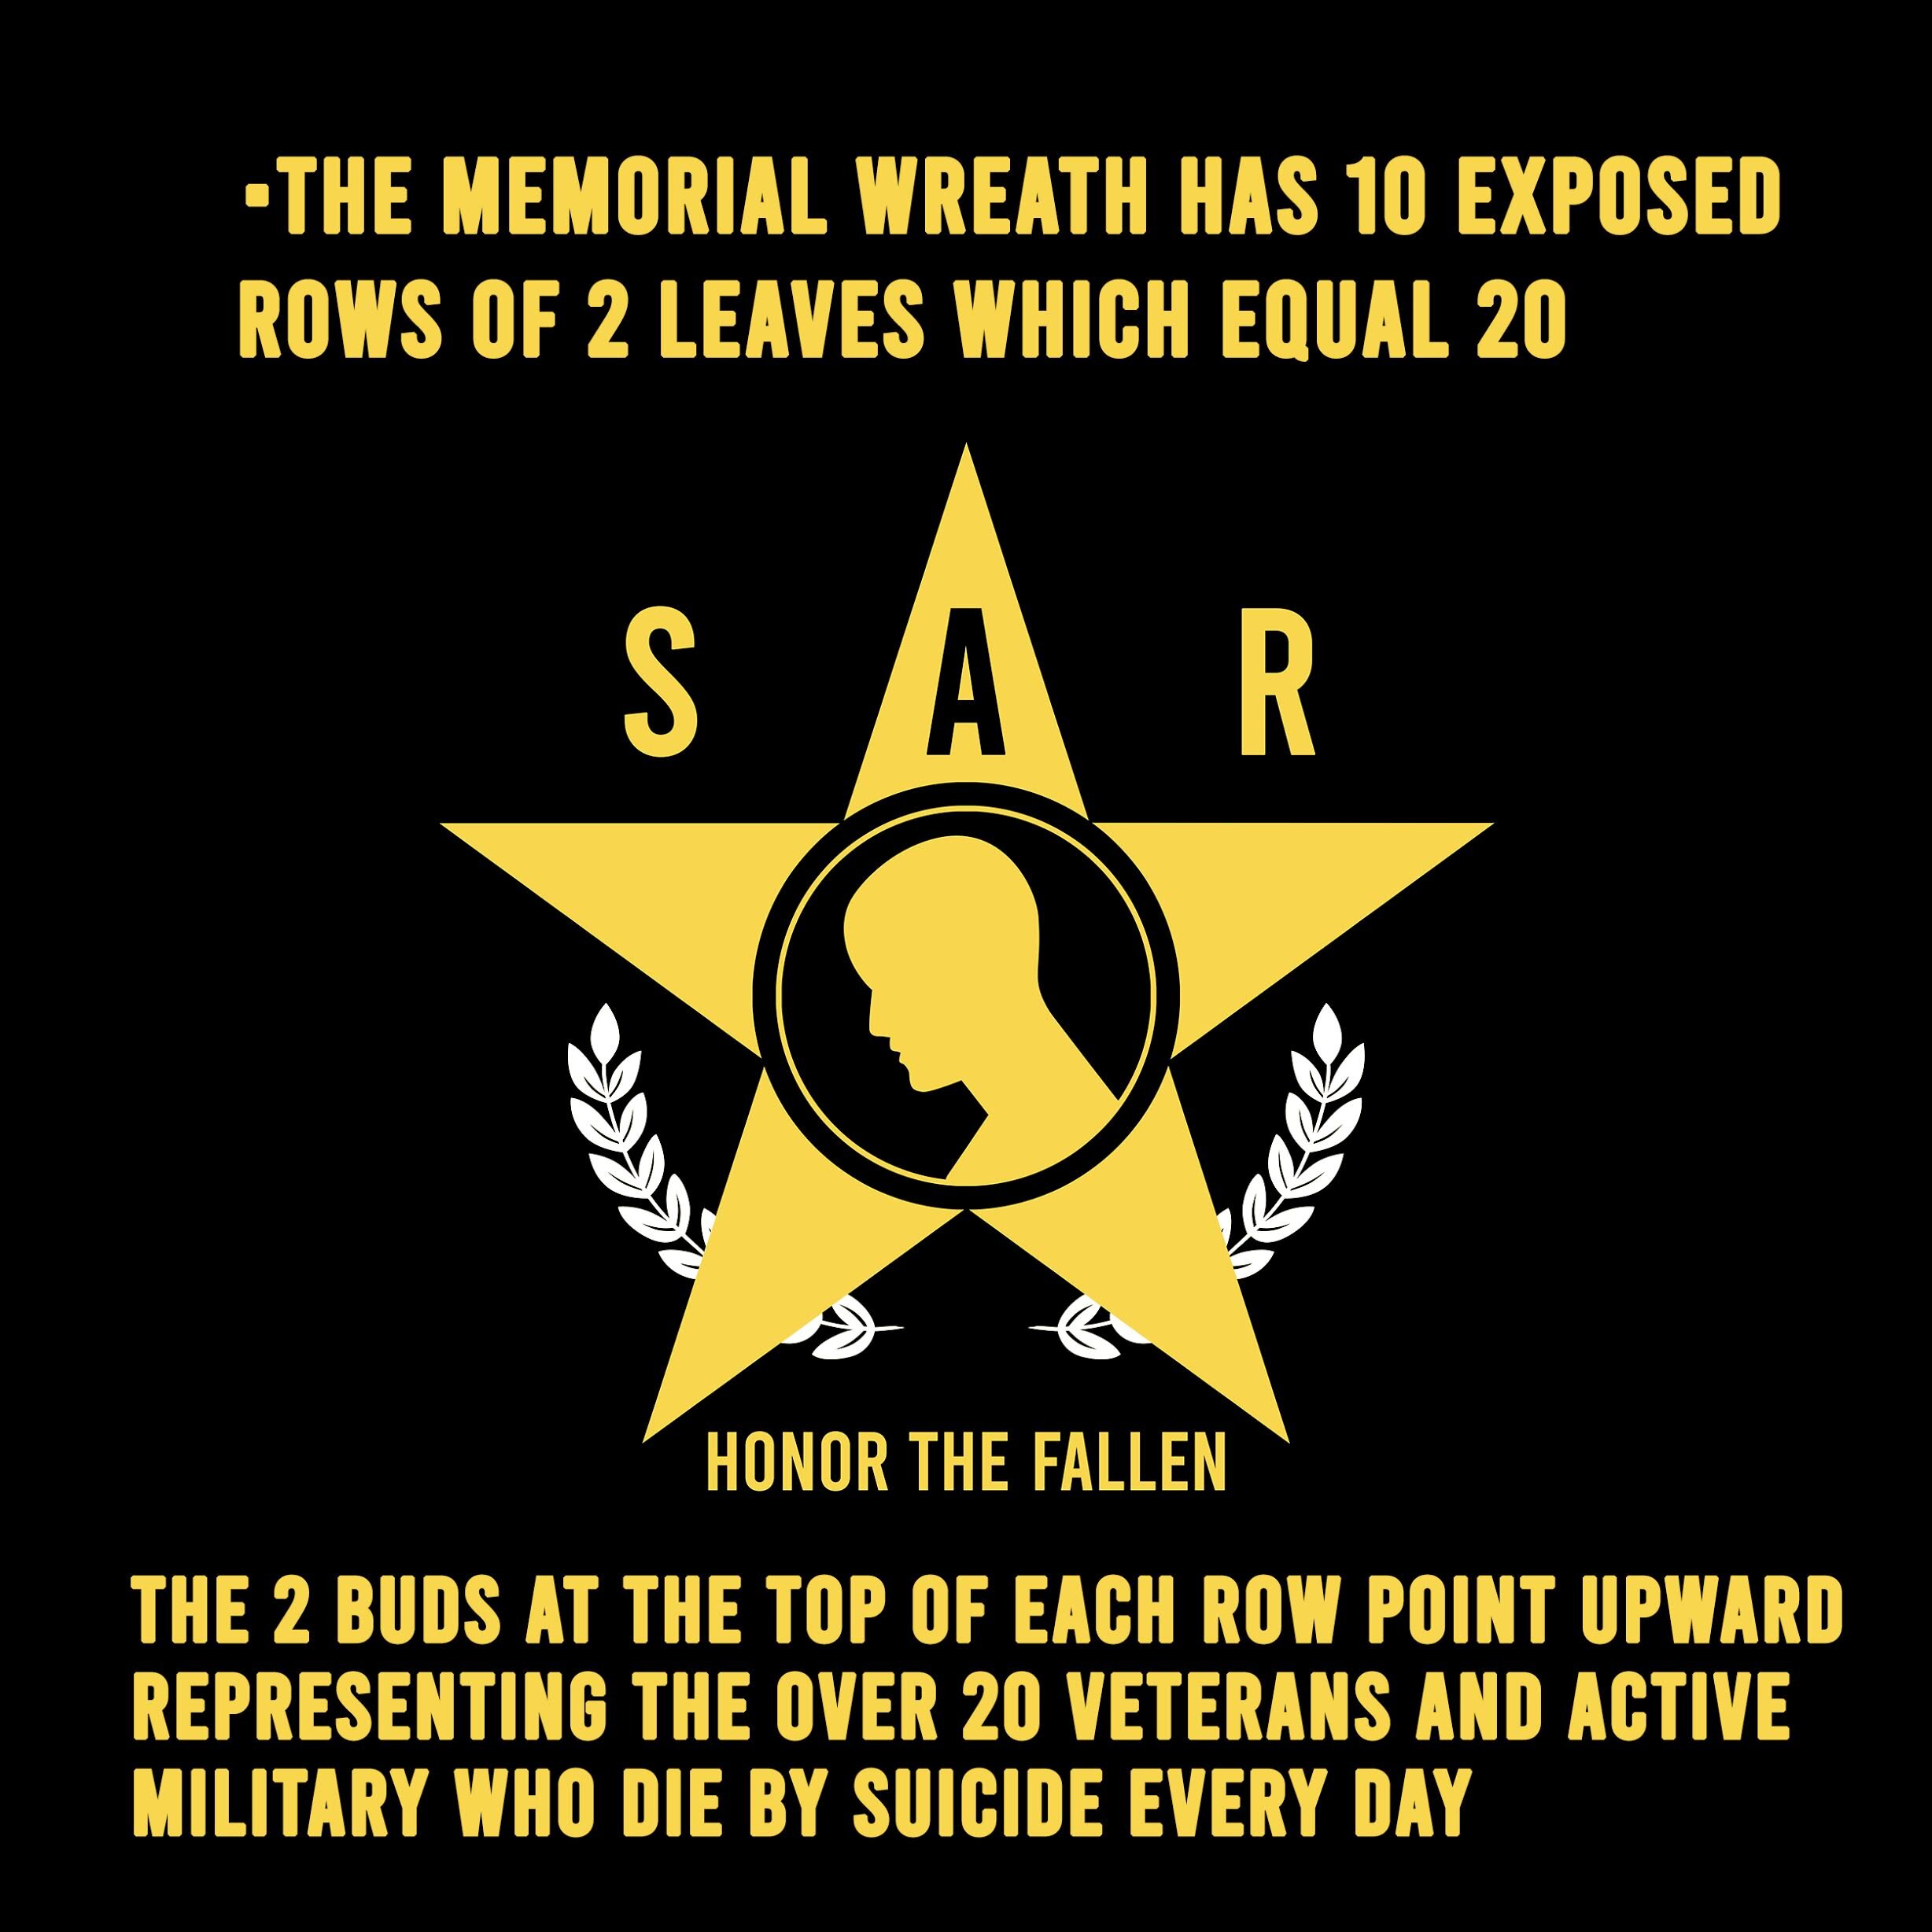 S-A-R Flag with description, 5 of 7